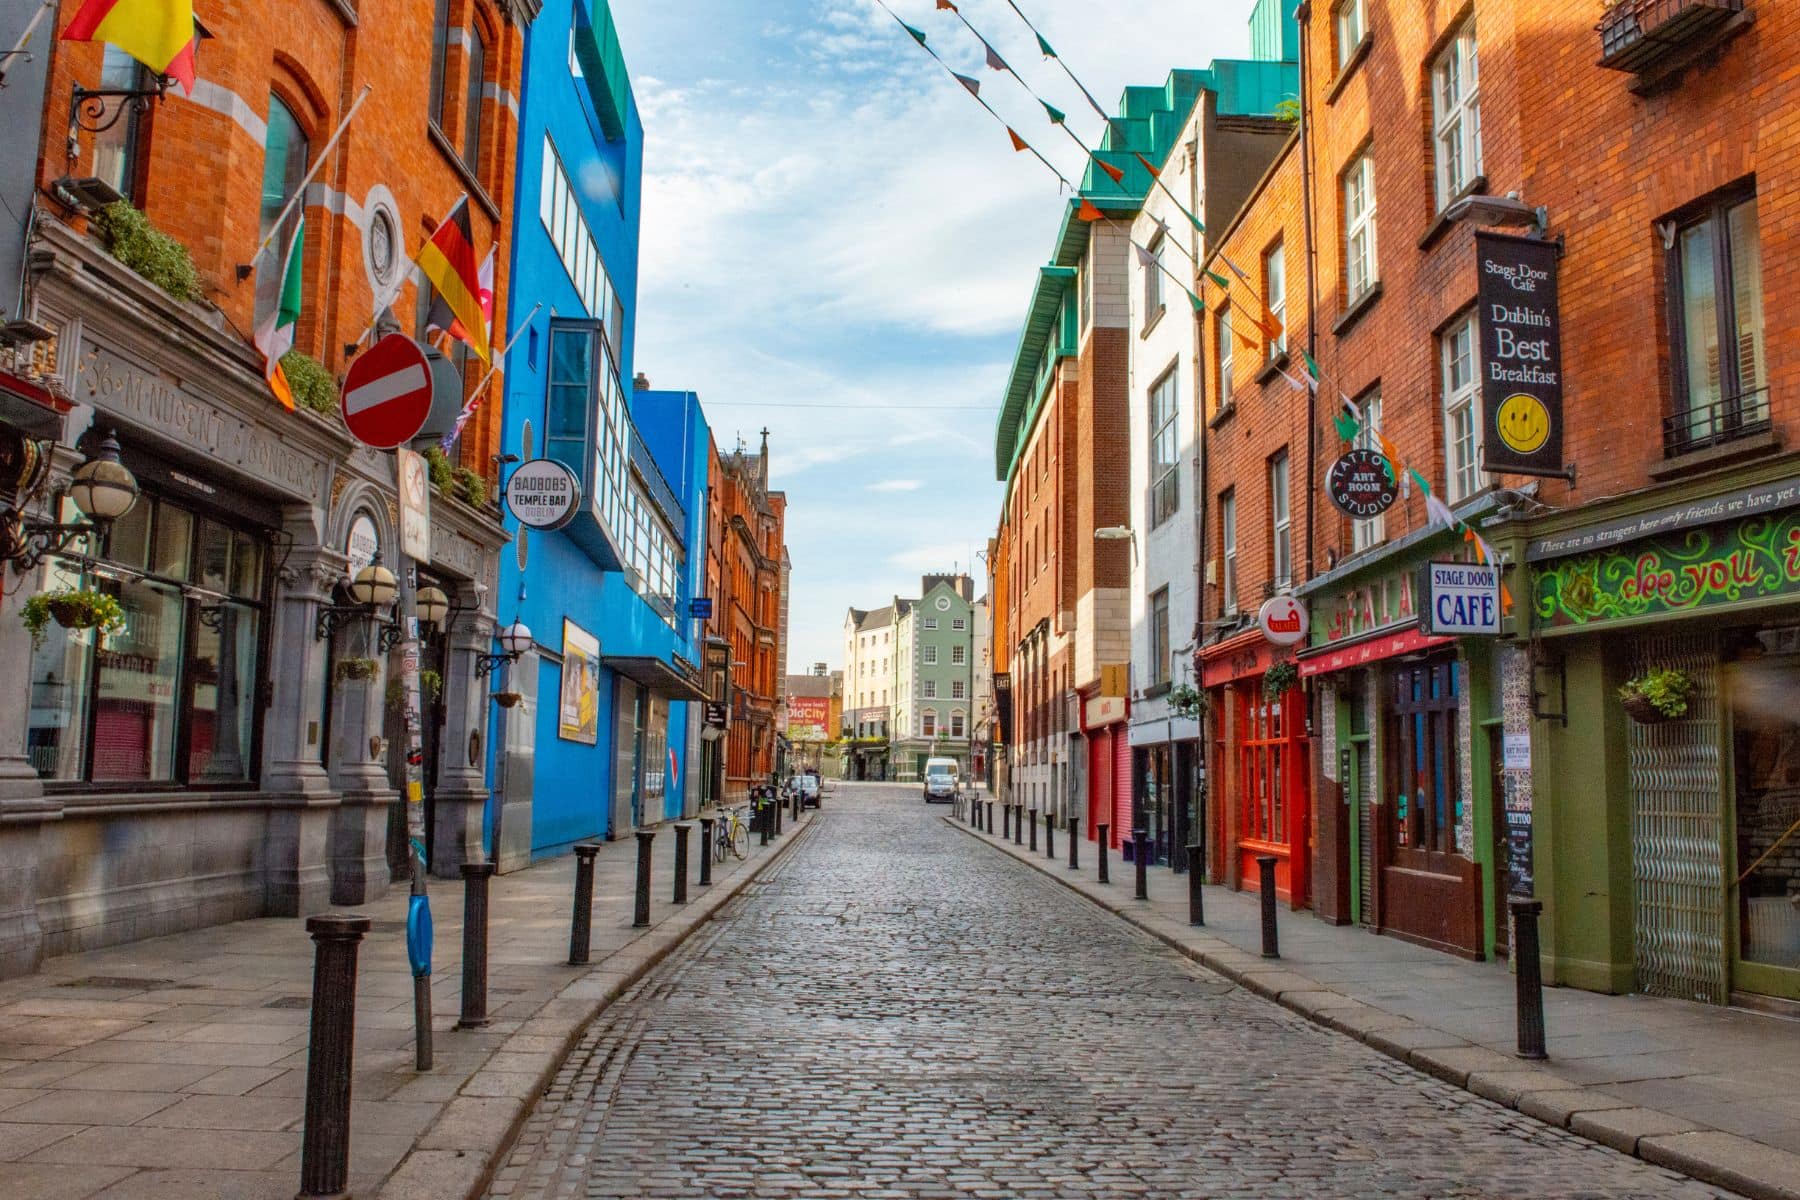 Descubriendo Dublín: no te pierdas estas joyas irlandesas